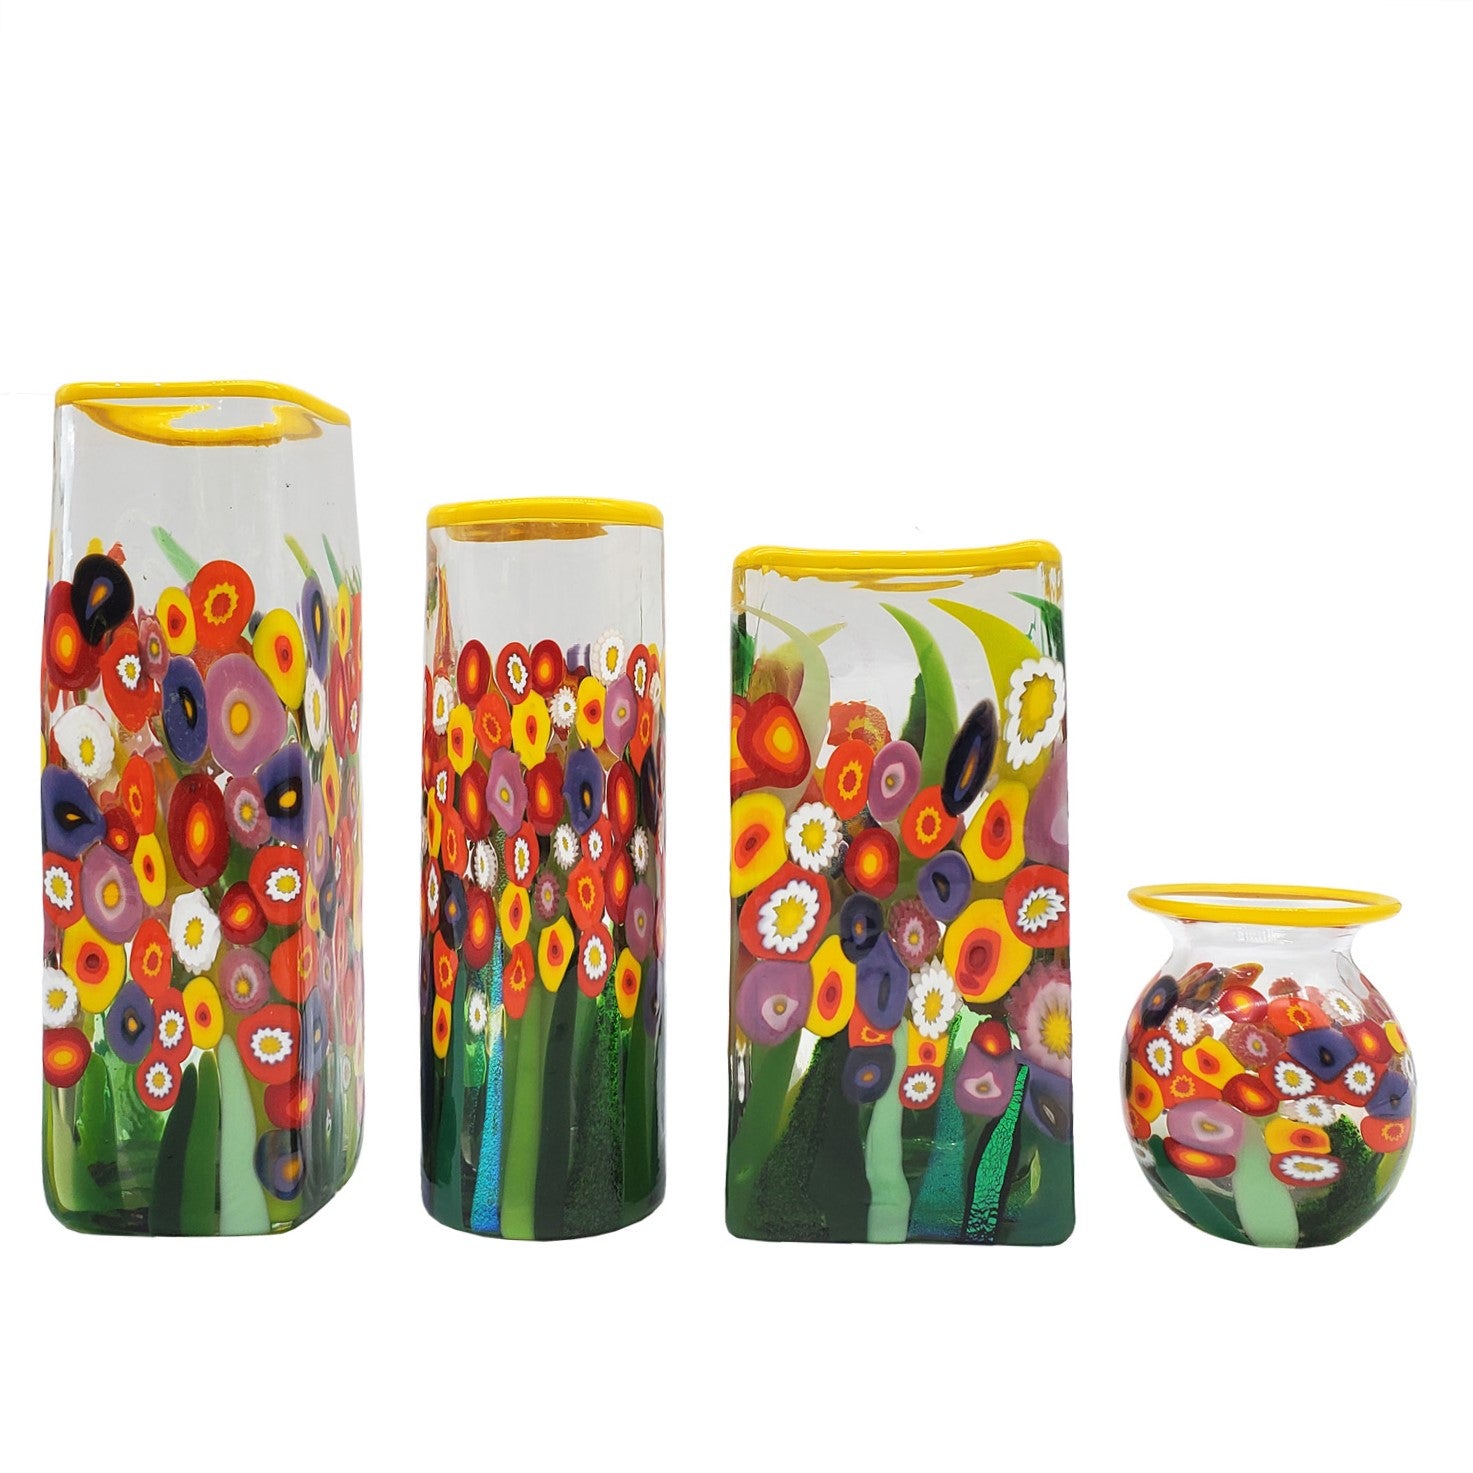 Glass Vase - Wildflowers